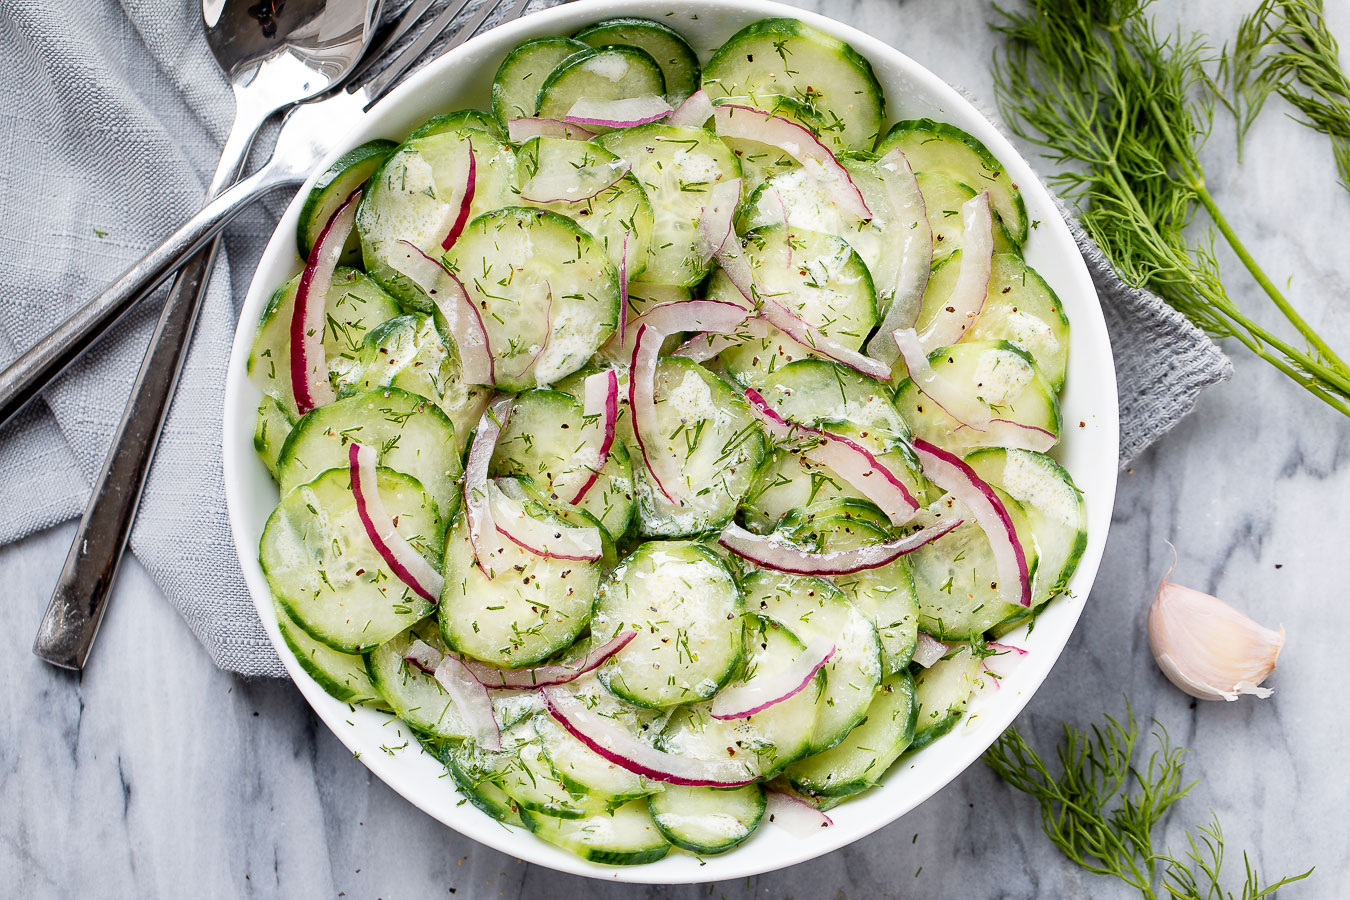 Marinated Cucumber Salad with Creamy Dill Sauce